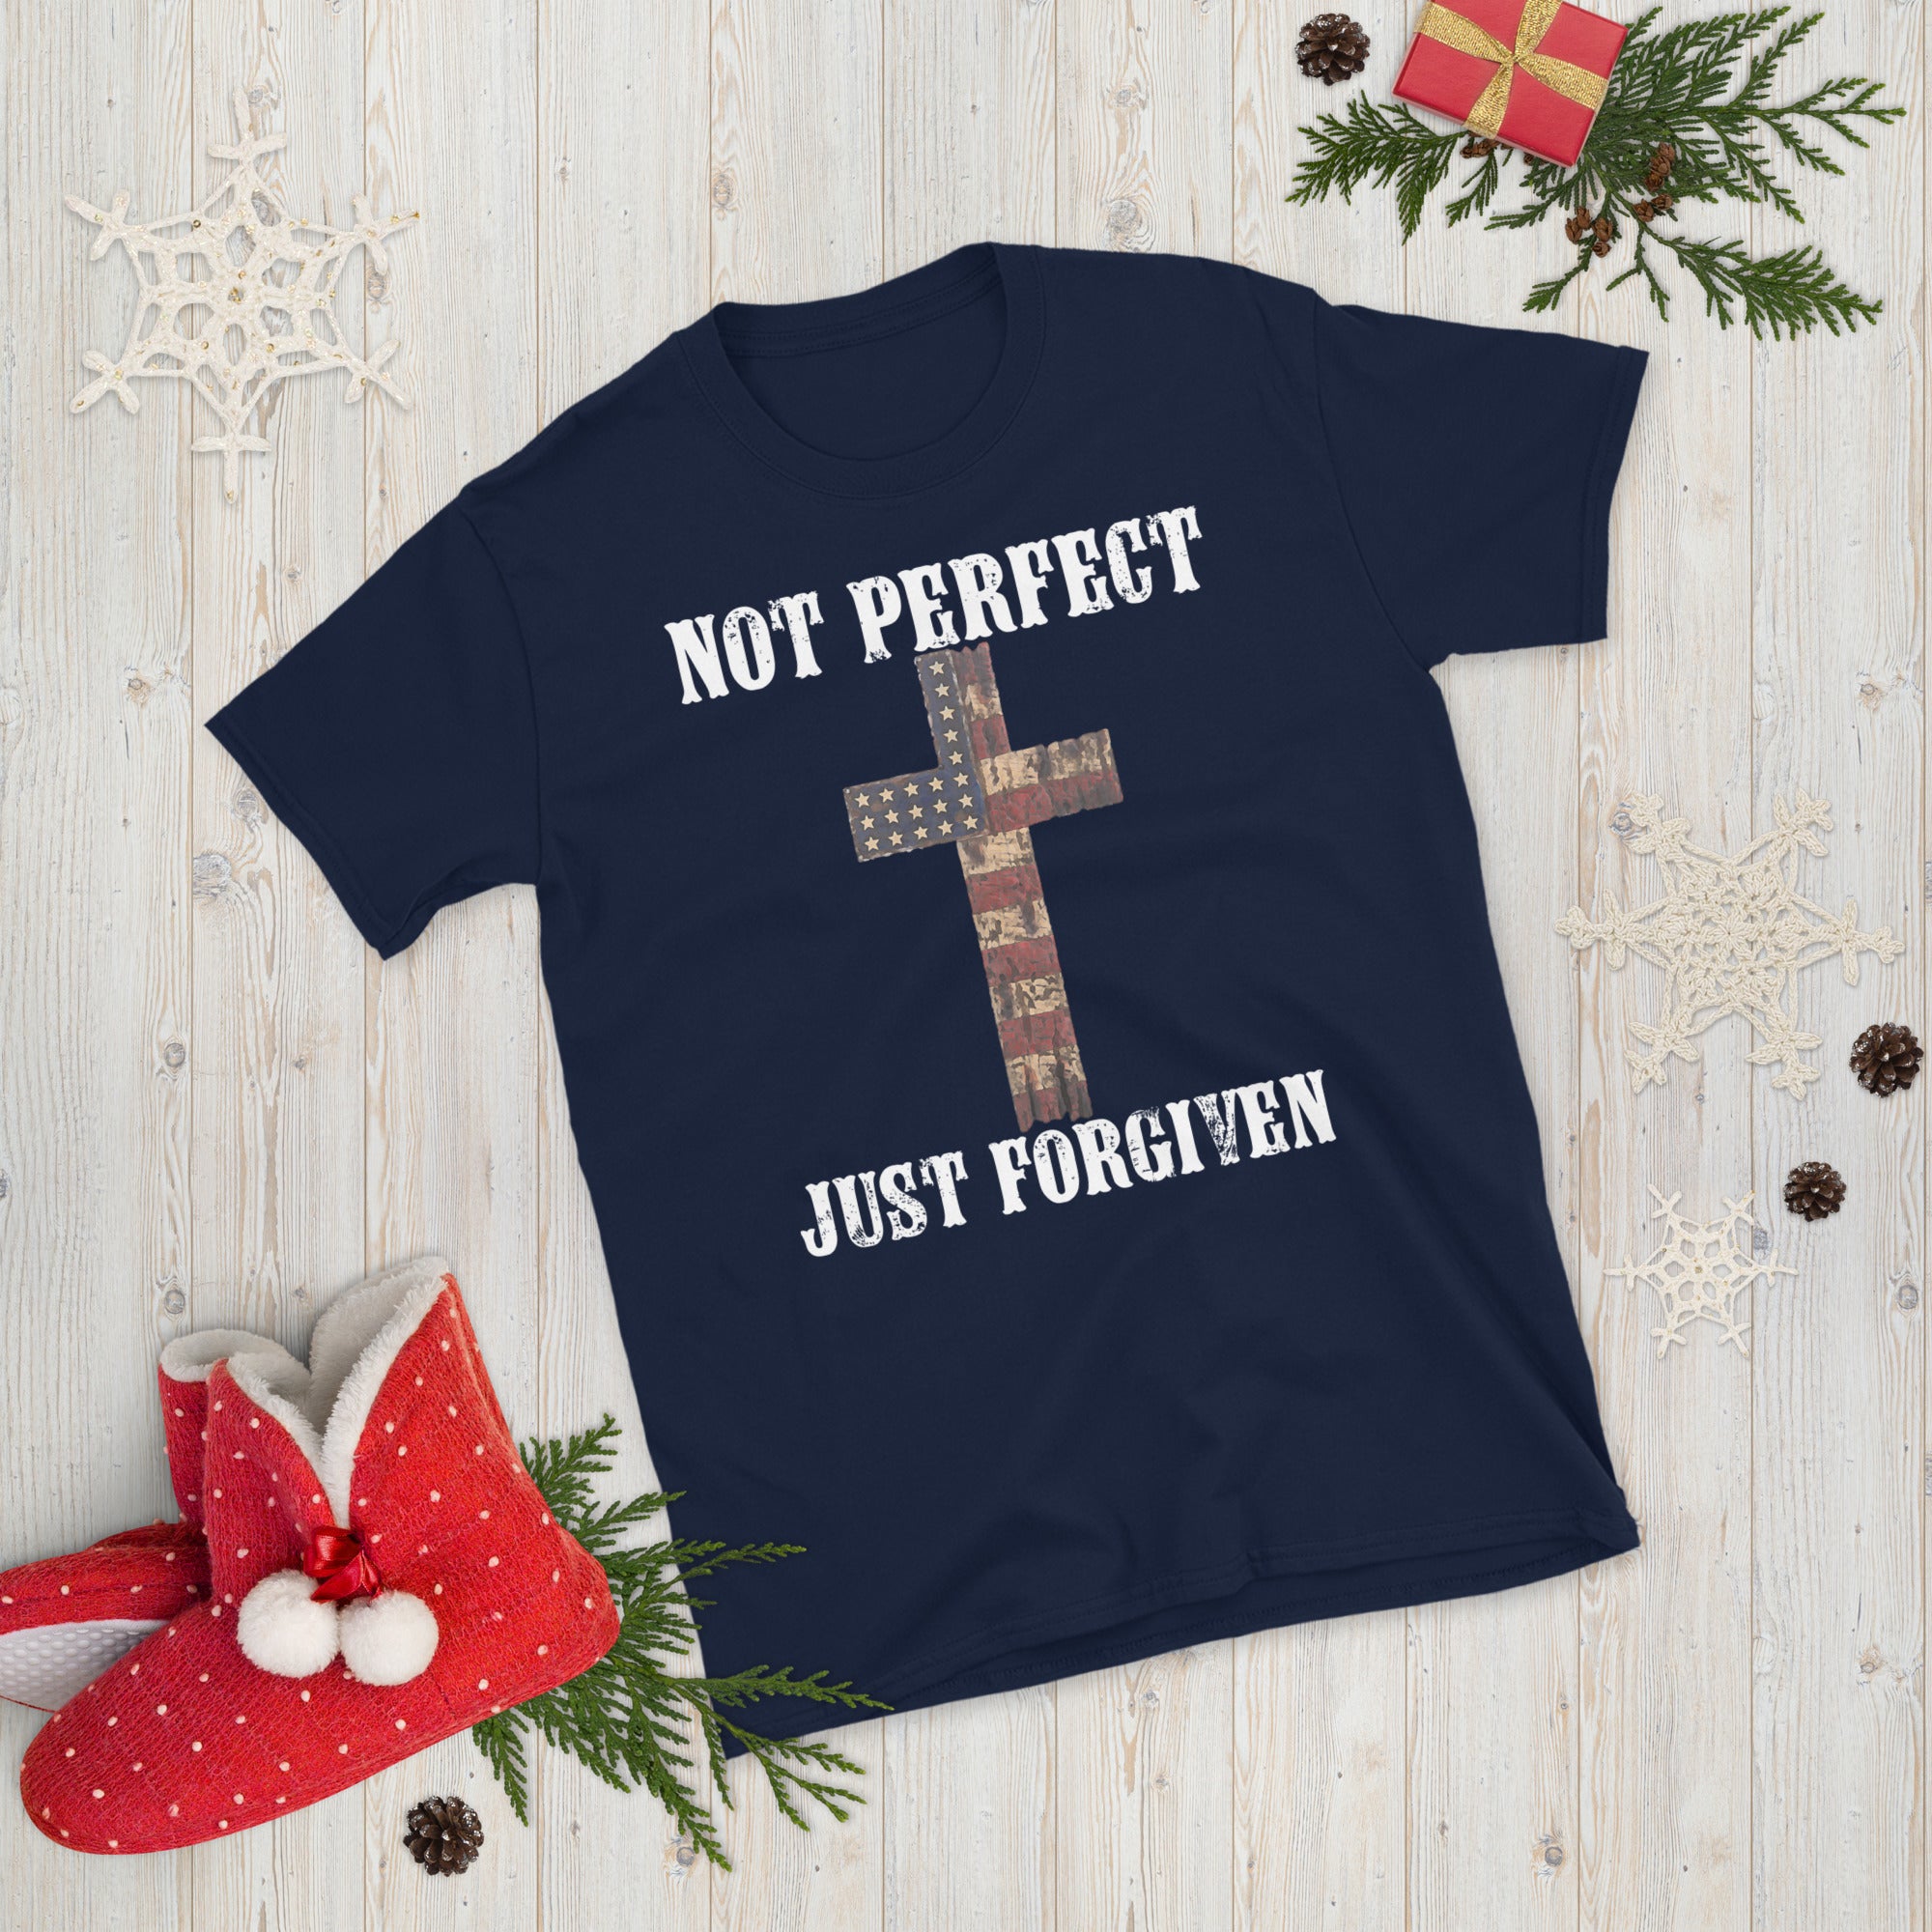 Not Perfect Just Forgiven Shirt, Christian Shirt, Religious Gifts For Women, Bible Verse Tshirt, Religious Gifts, Holy Bible T Shirt - Madeinsea©